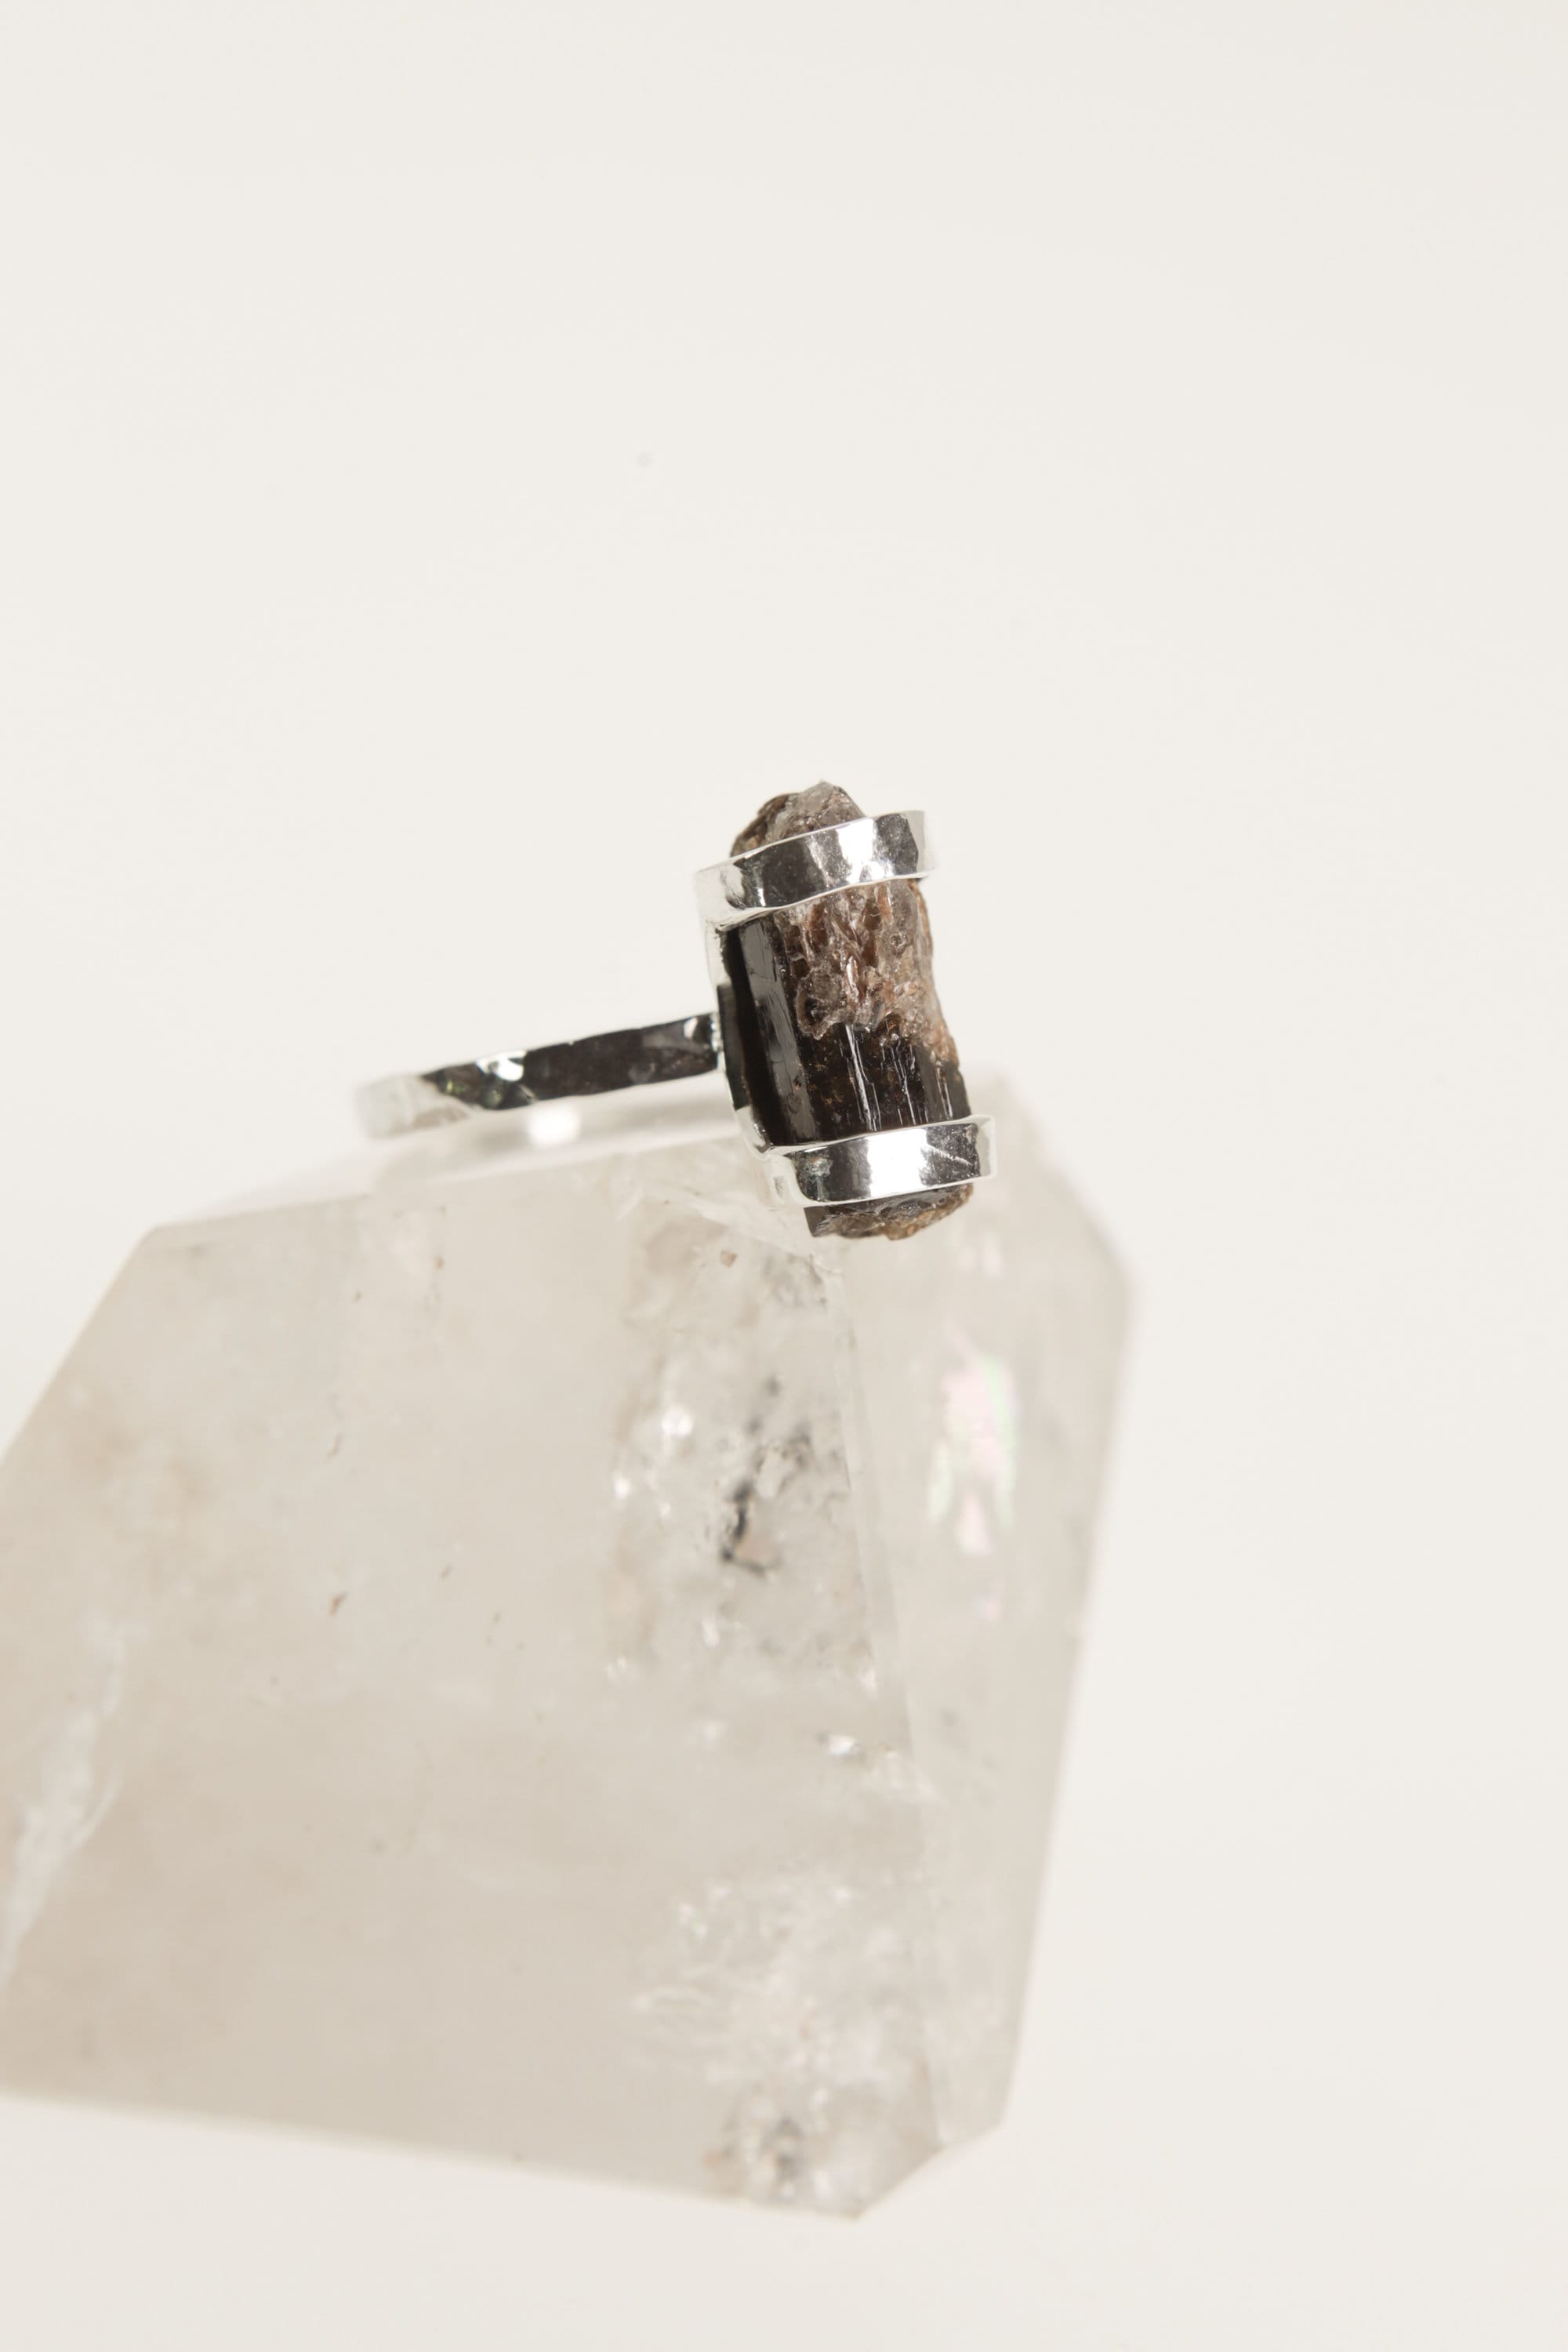 Earthen Elegance Gemmy Dravite Tourmaline Ring - Hammered & Shiny Finish - Sterling Silver Ring - Size 9 US